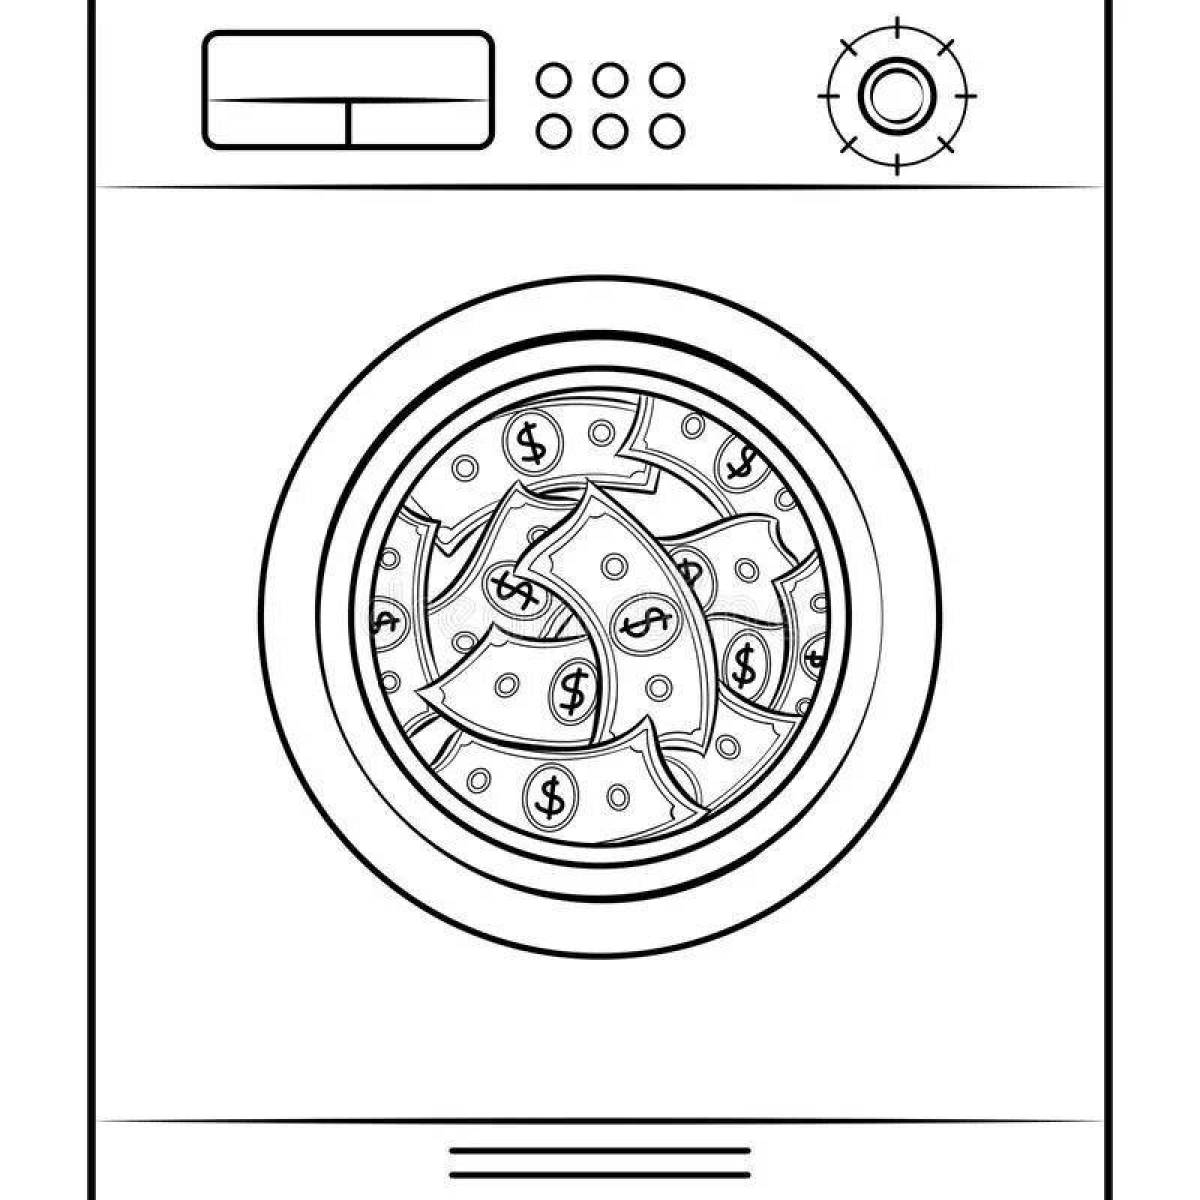 Fashion washing machine coloring page